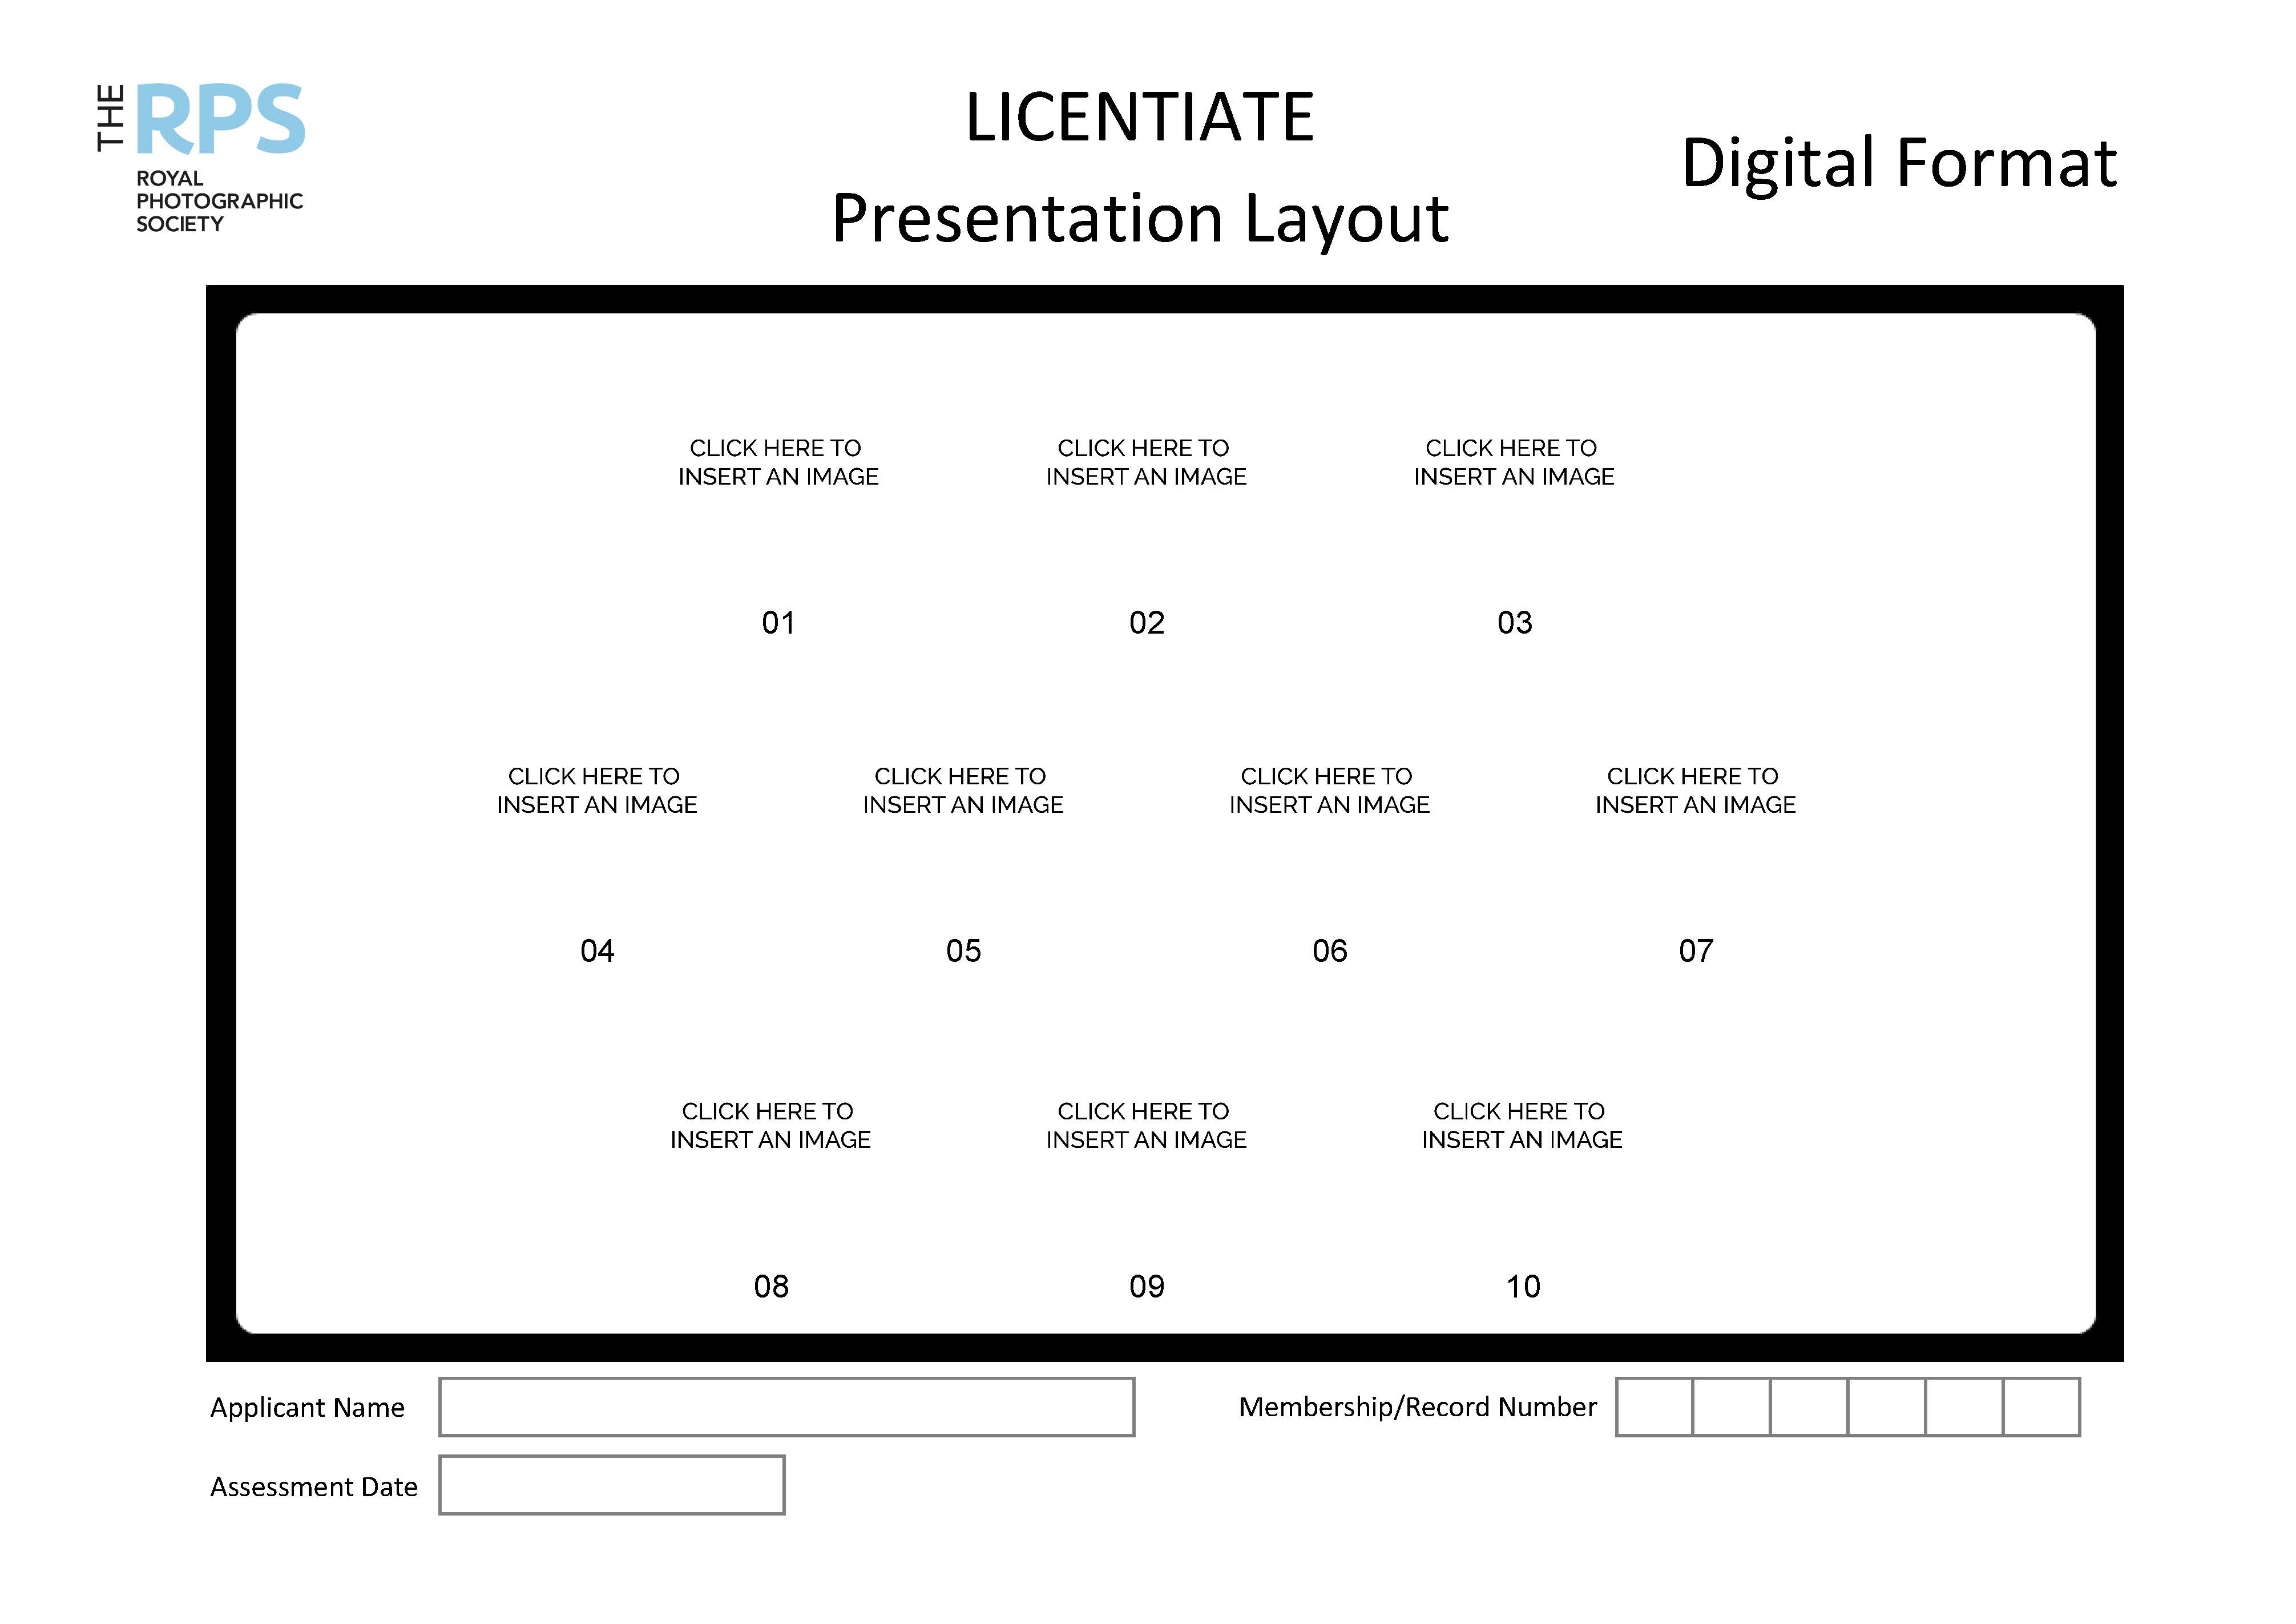 LRPS 2021 Presentation Layout 3 4 3 DIGITAL